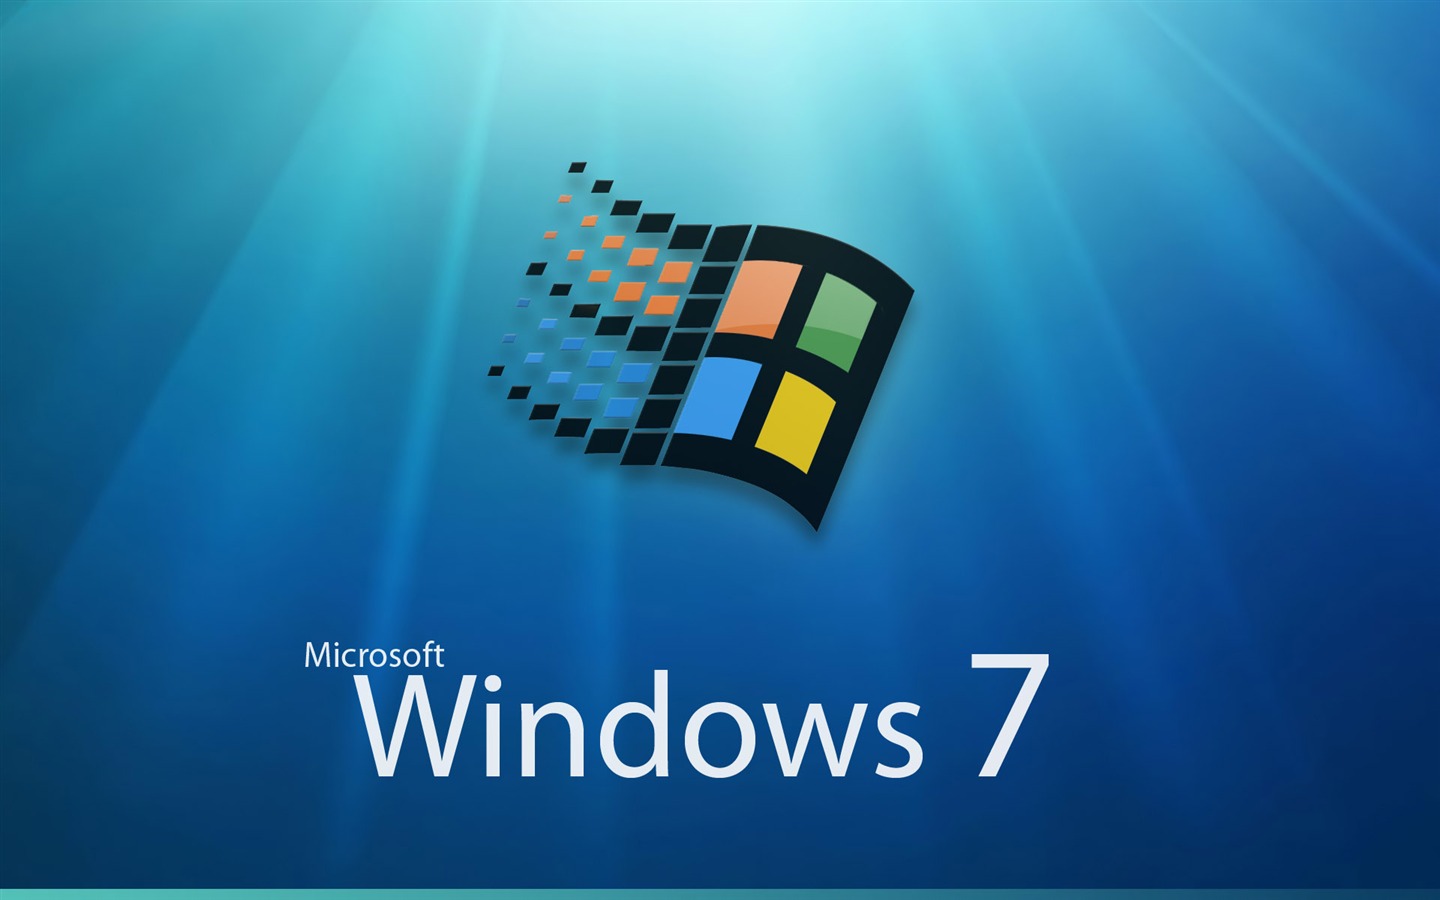 Fondos de escritorio de Windows7 #1 - 1440x900